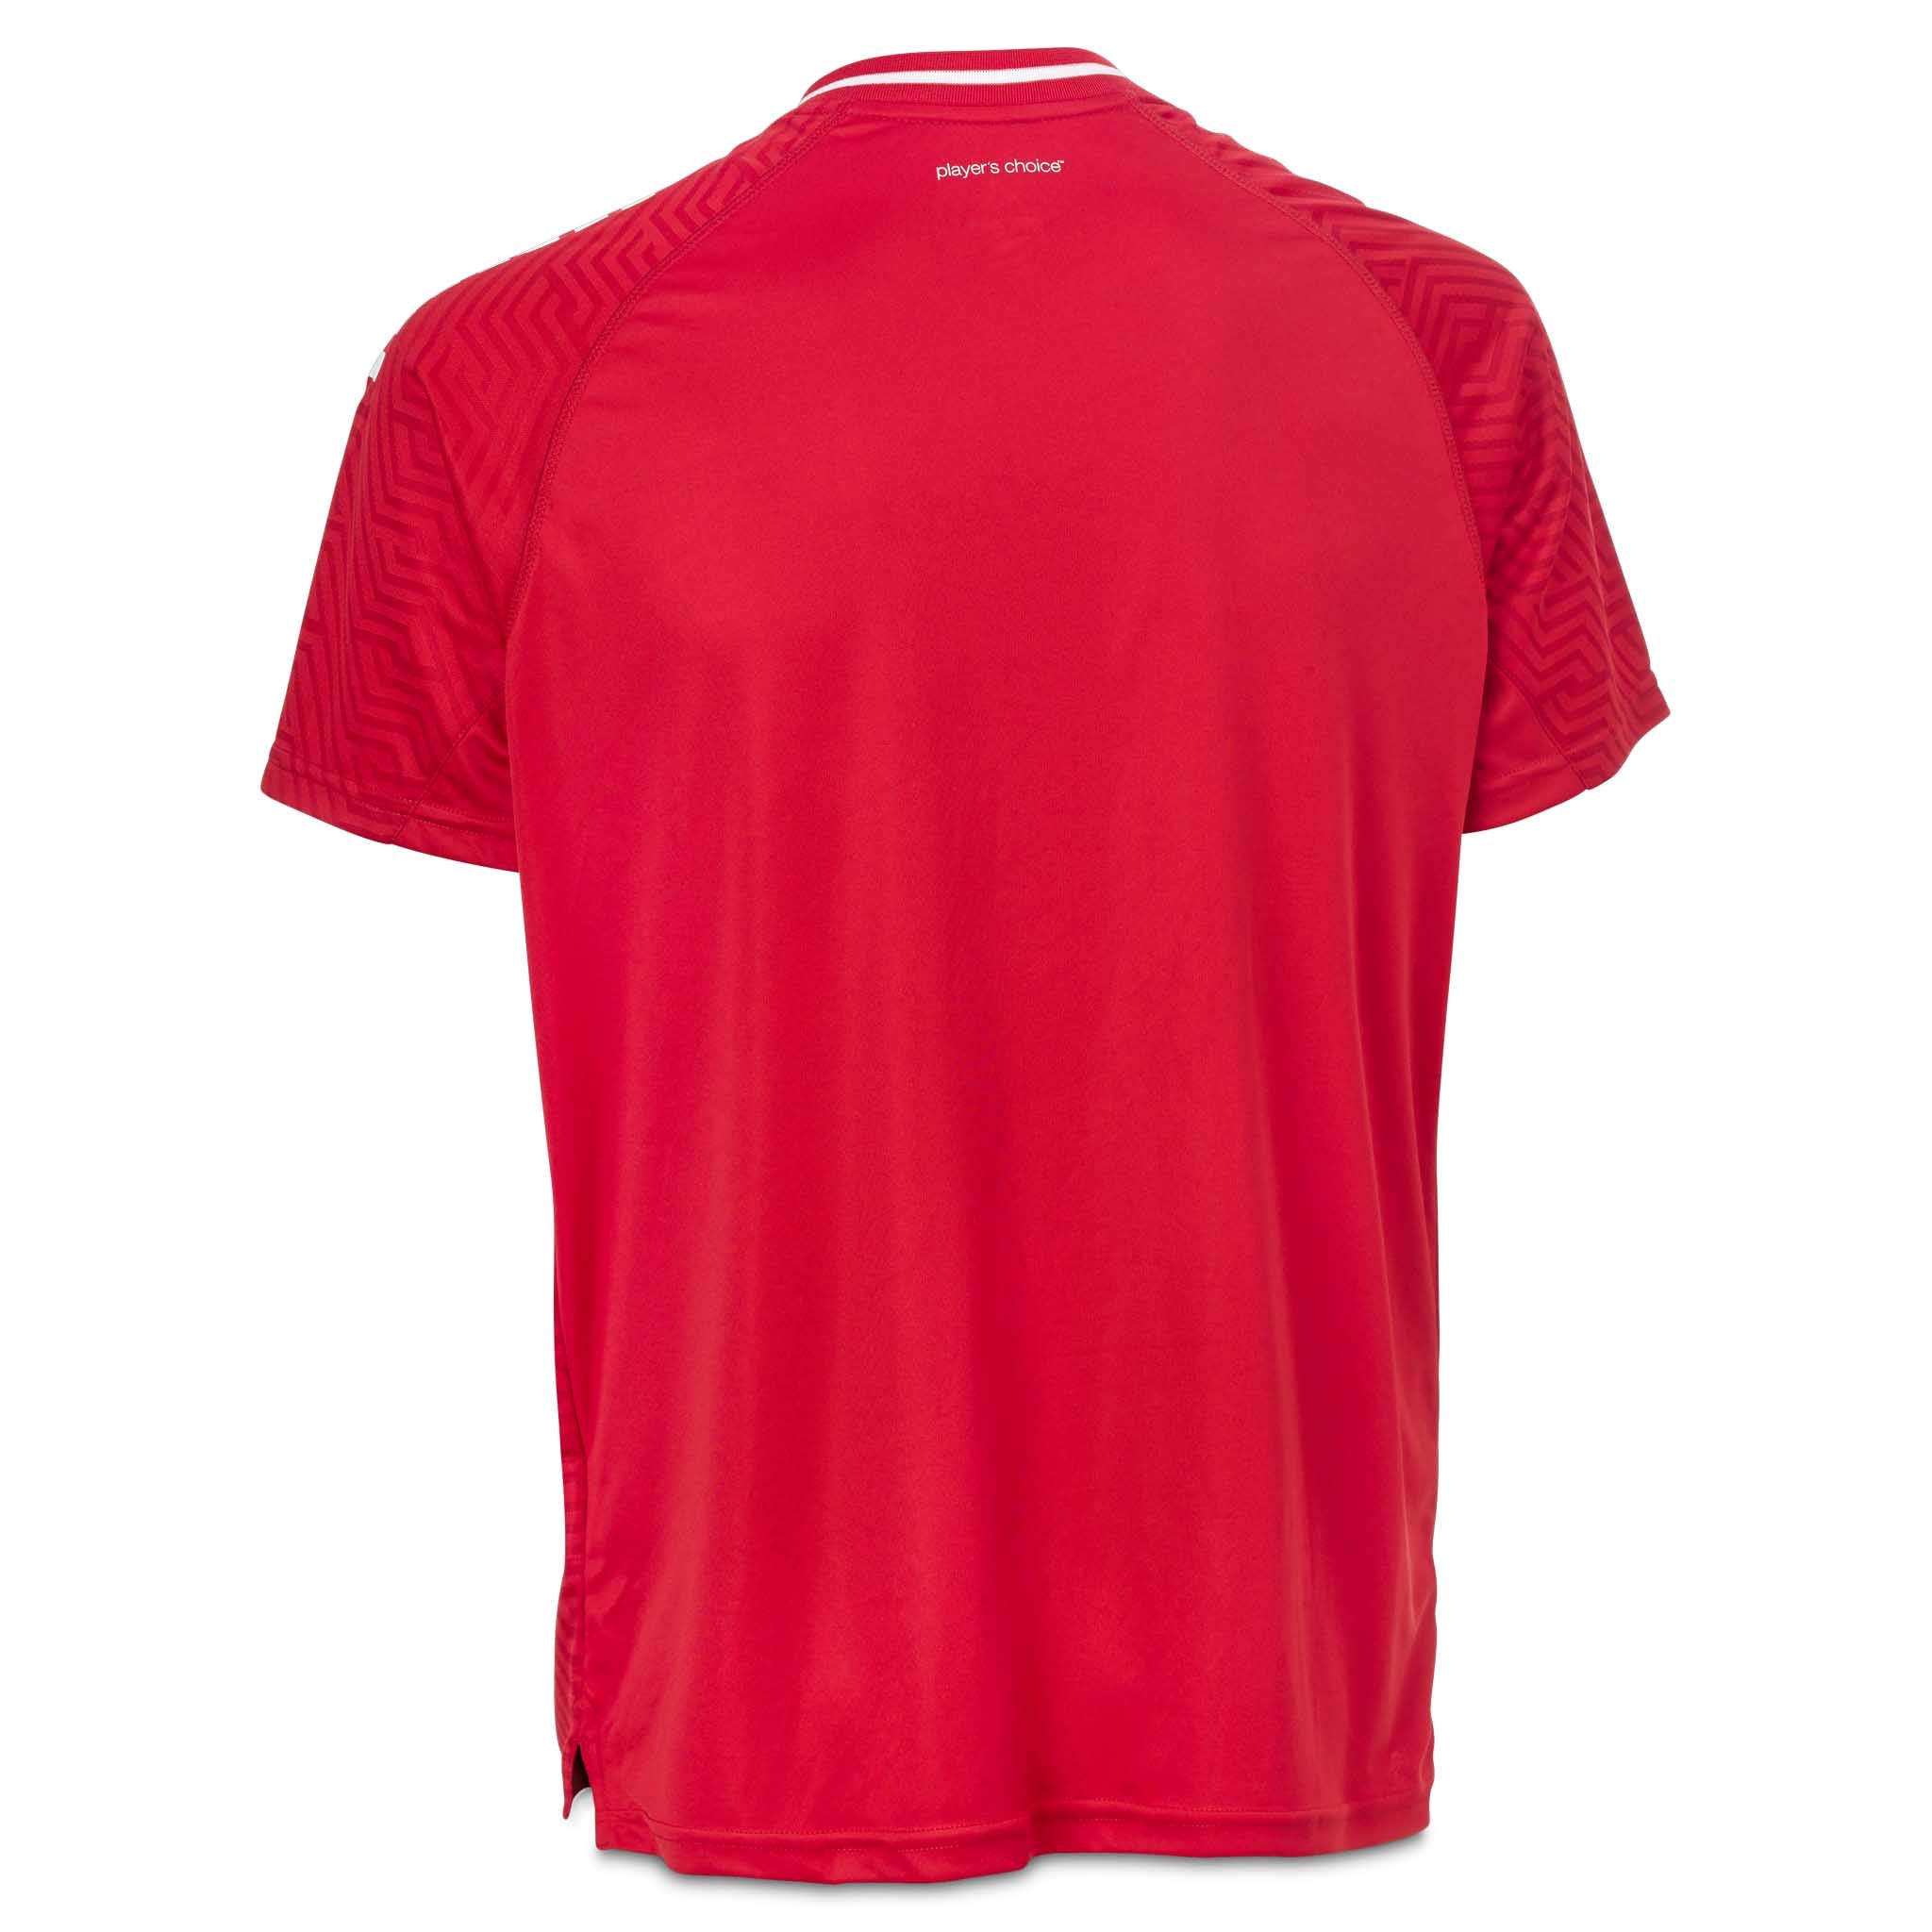 Monaco Player shirt S/S - Kids #colour_red/white